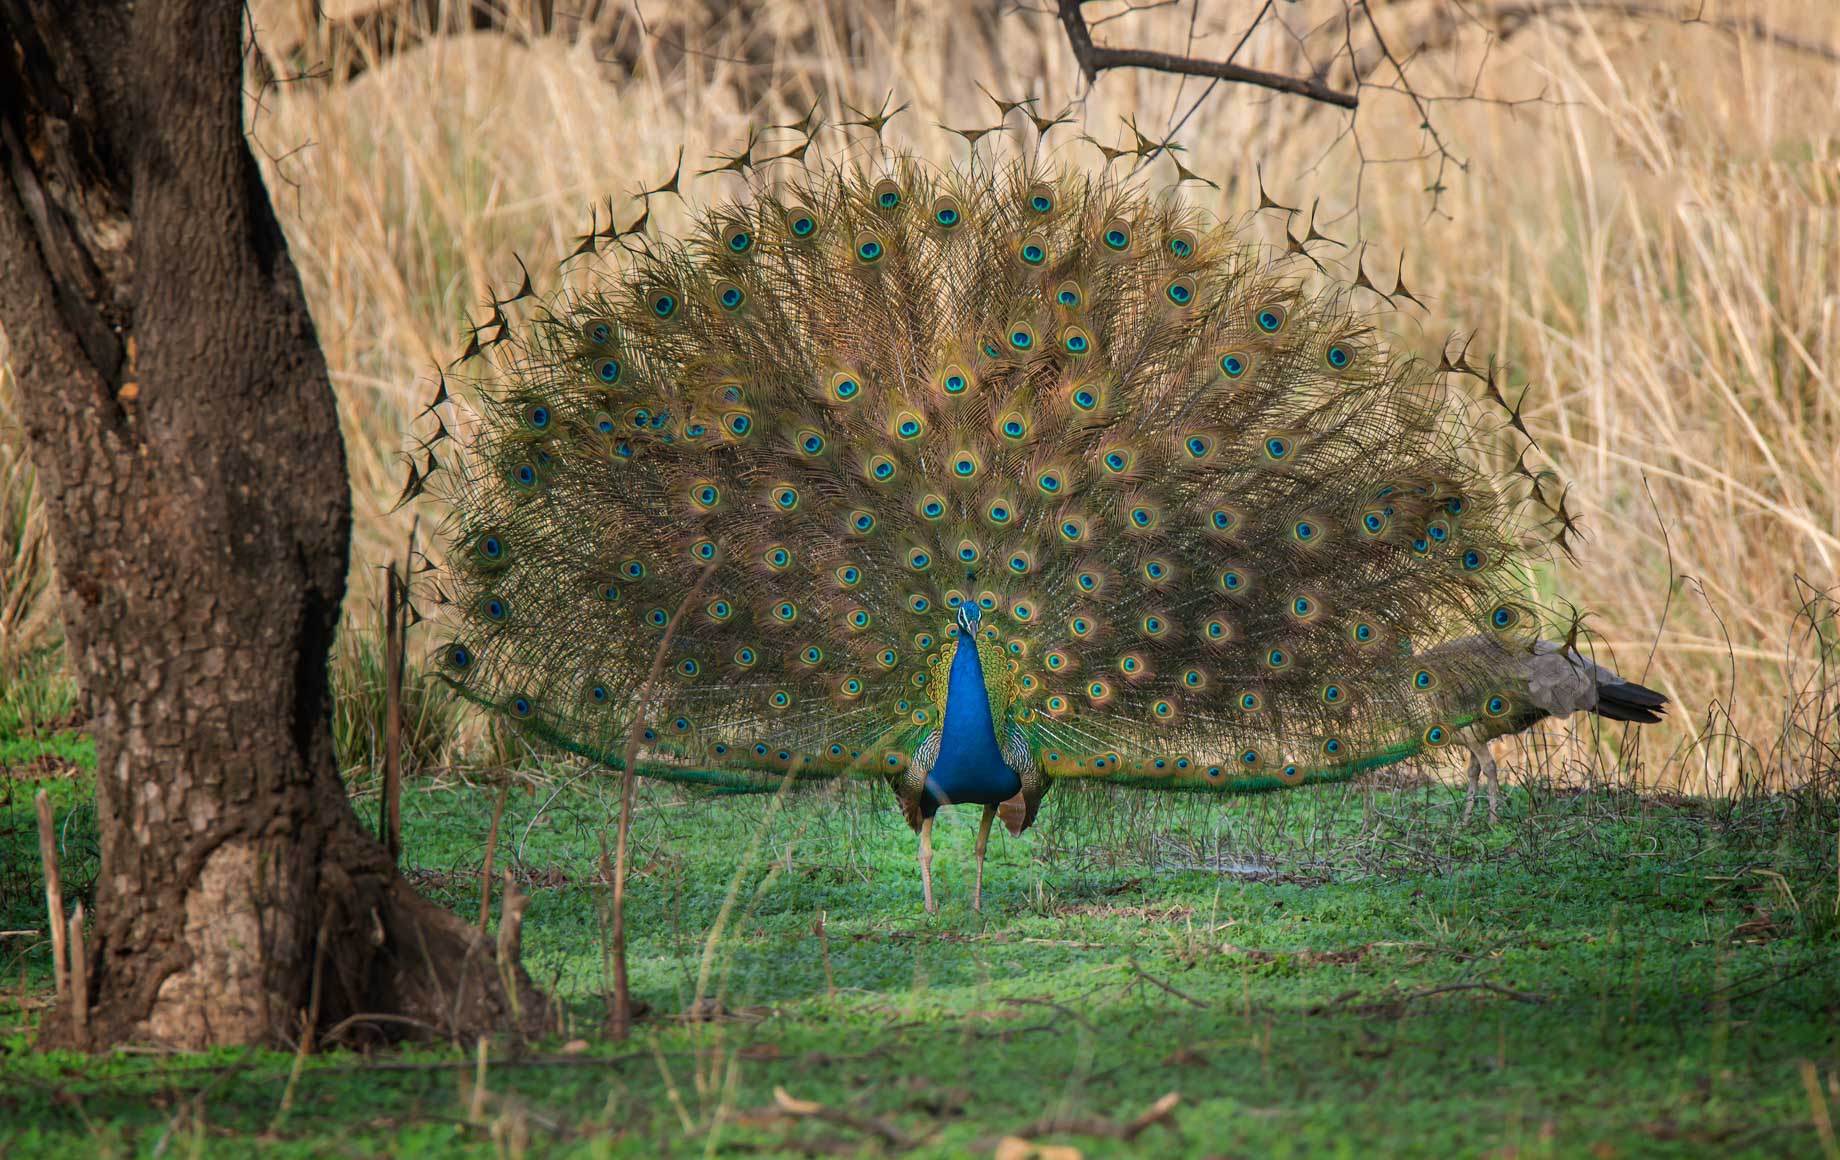 Dancing peacock in Ranthamore National Park